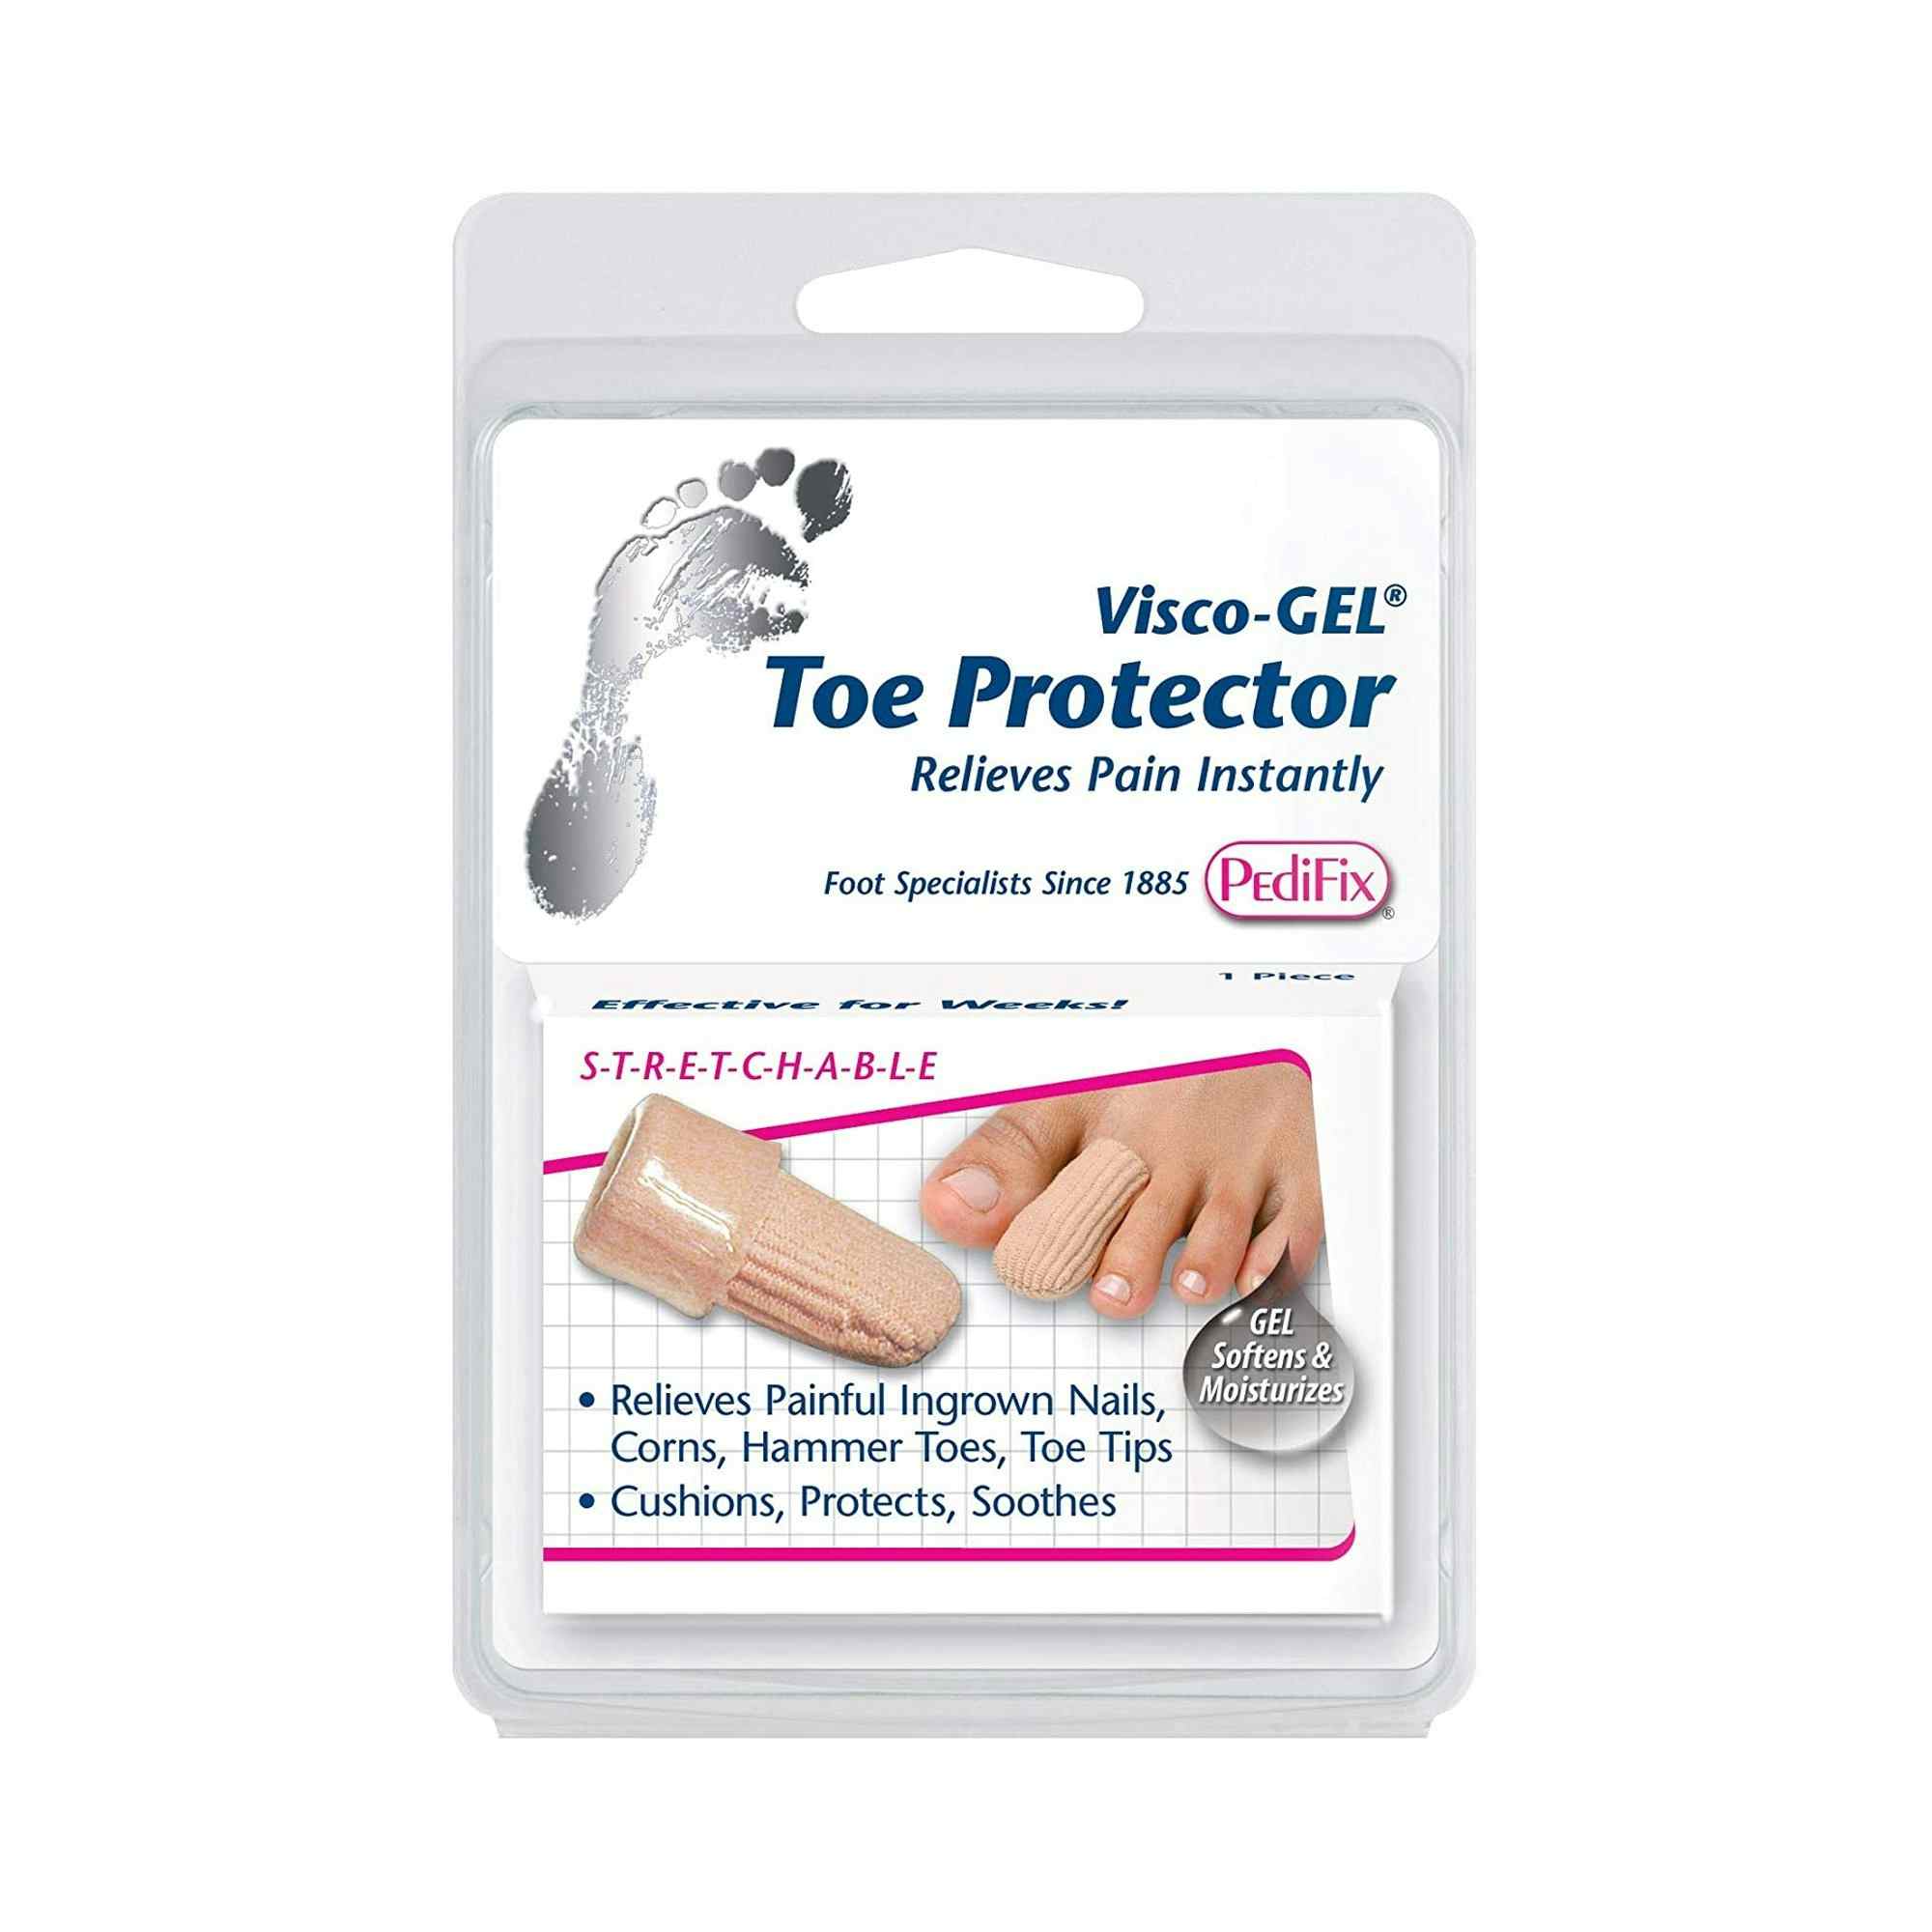 Visco-GEL Toe Protector, P82-L, Large - 1 Each